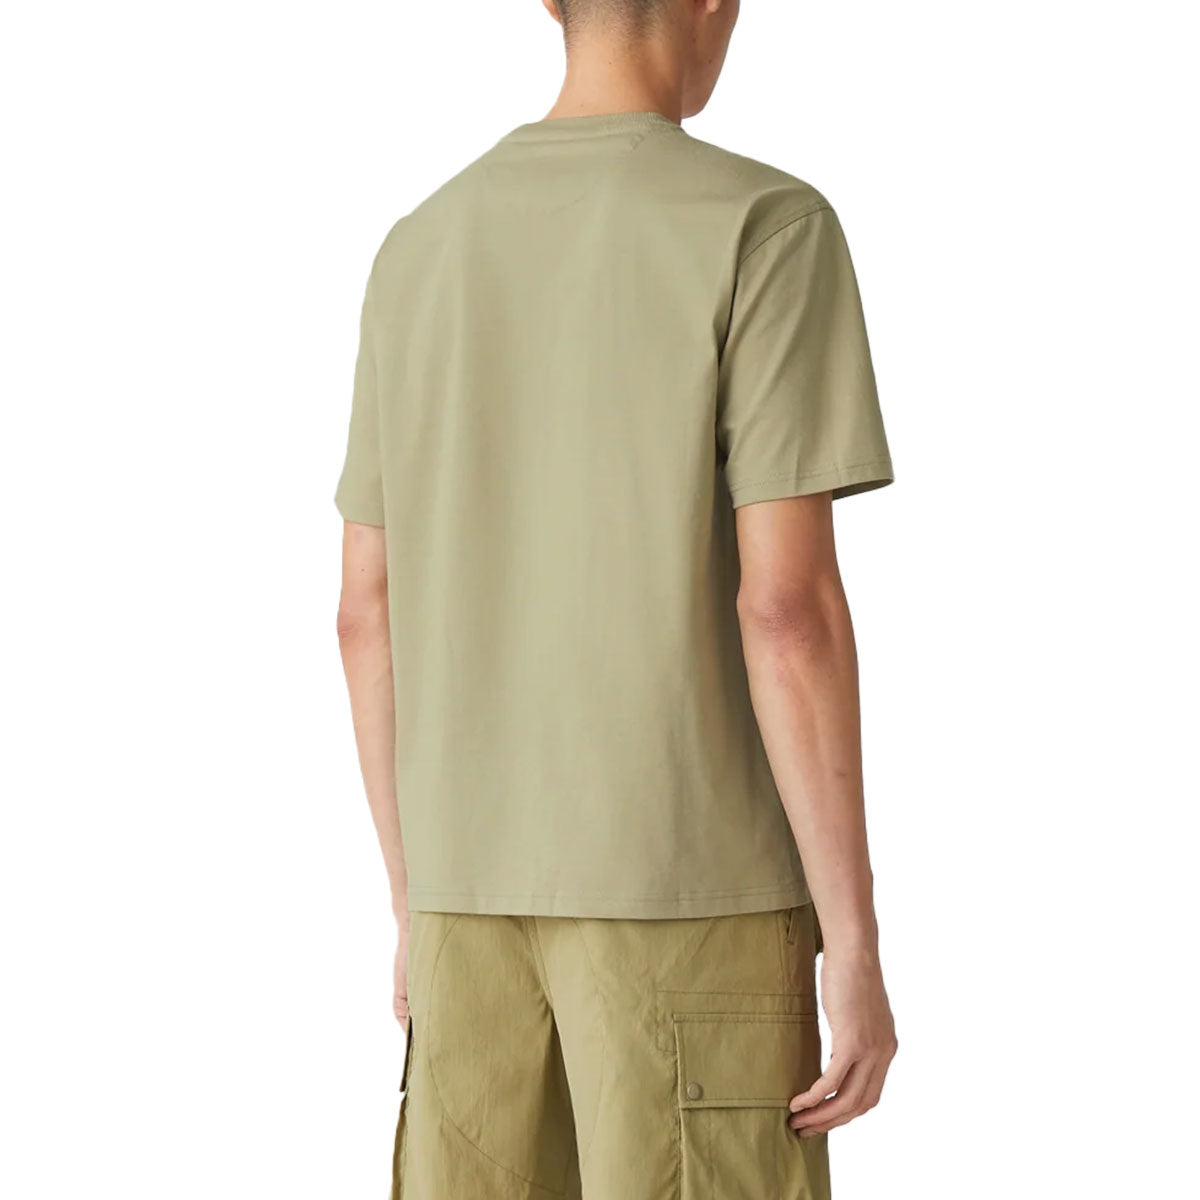 Aloe Green Transit Organic Cotton T-shirt Short Sleeve Belstaff   